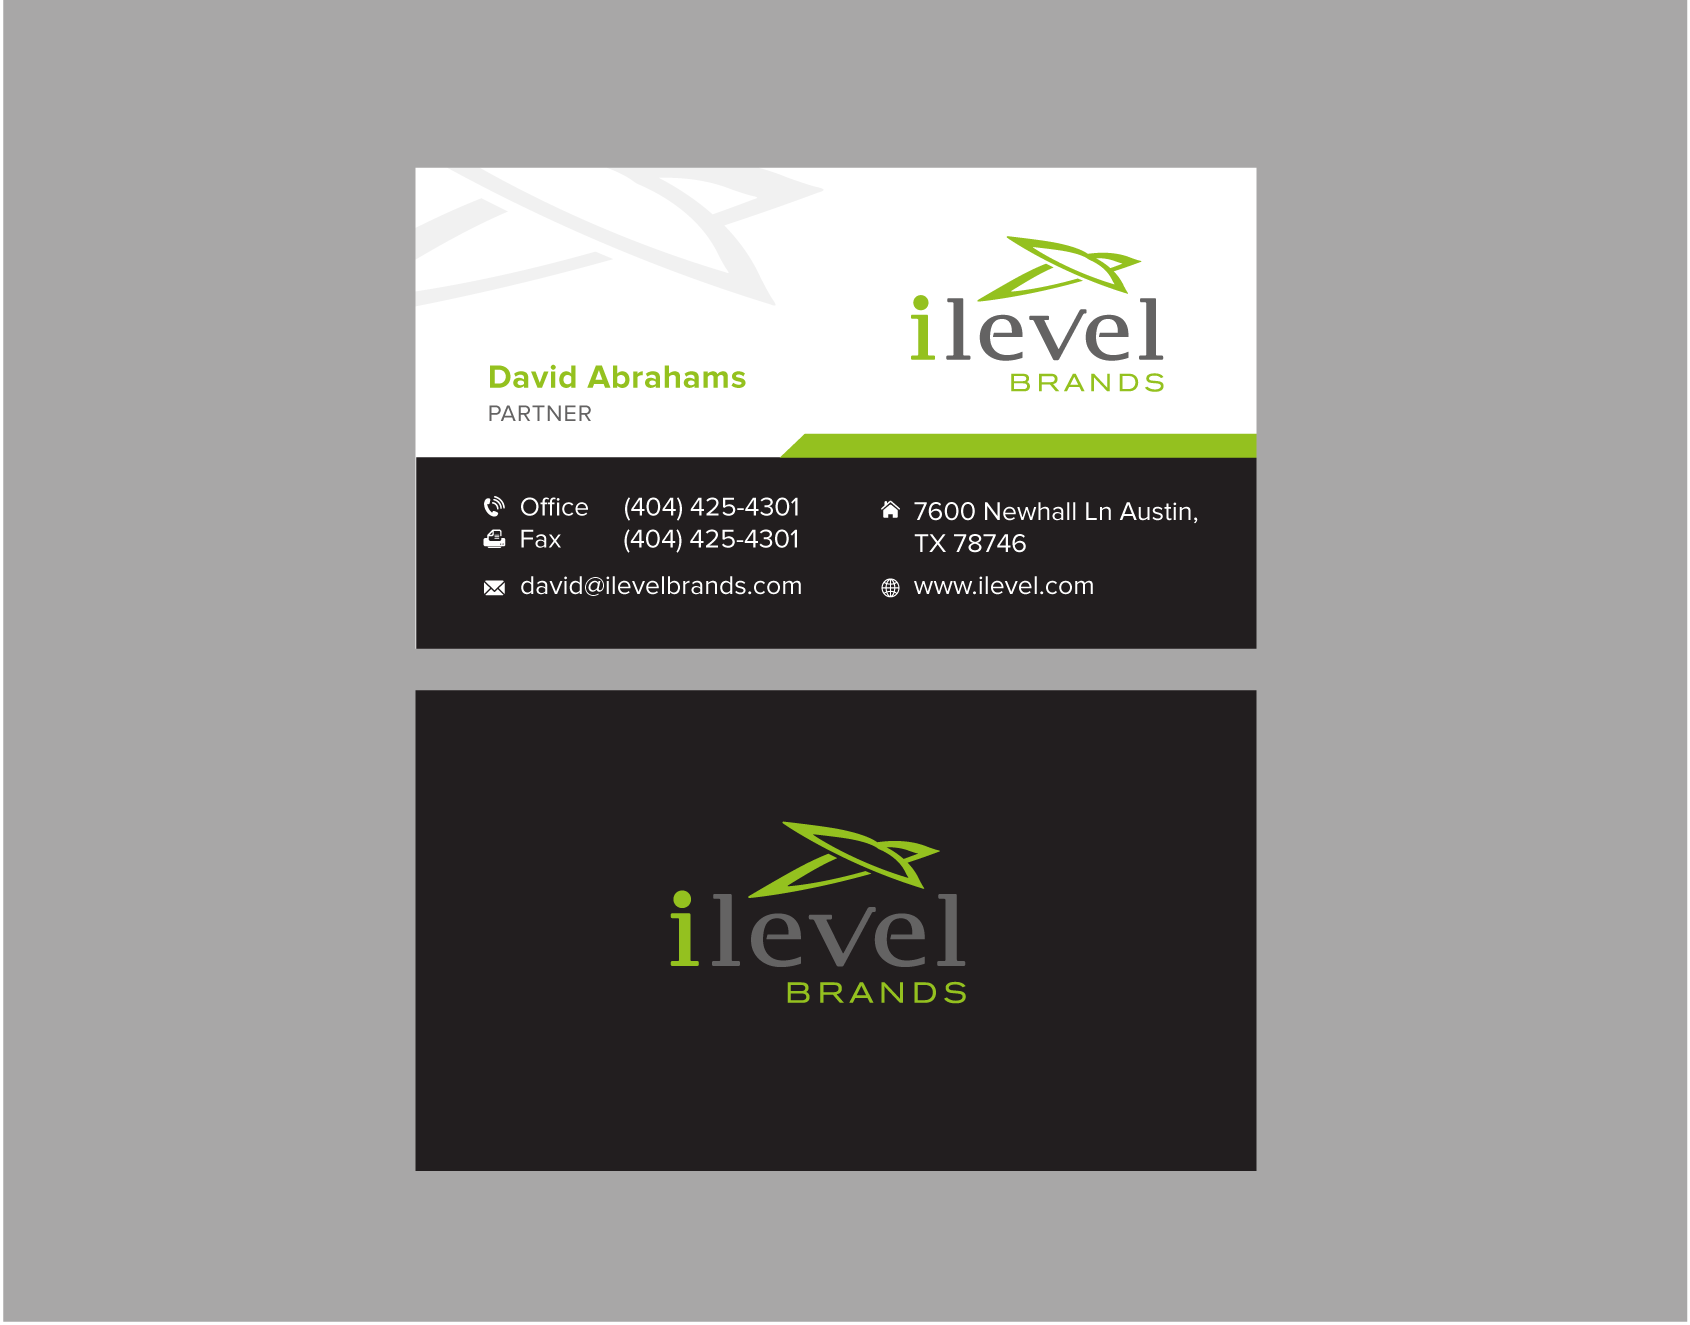 Business Card & Stationery Design entry 1563907 submitted by zayyadi to the Business Card & Stationery Design for iLevel Brands run by ilevelpartner